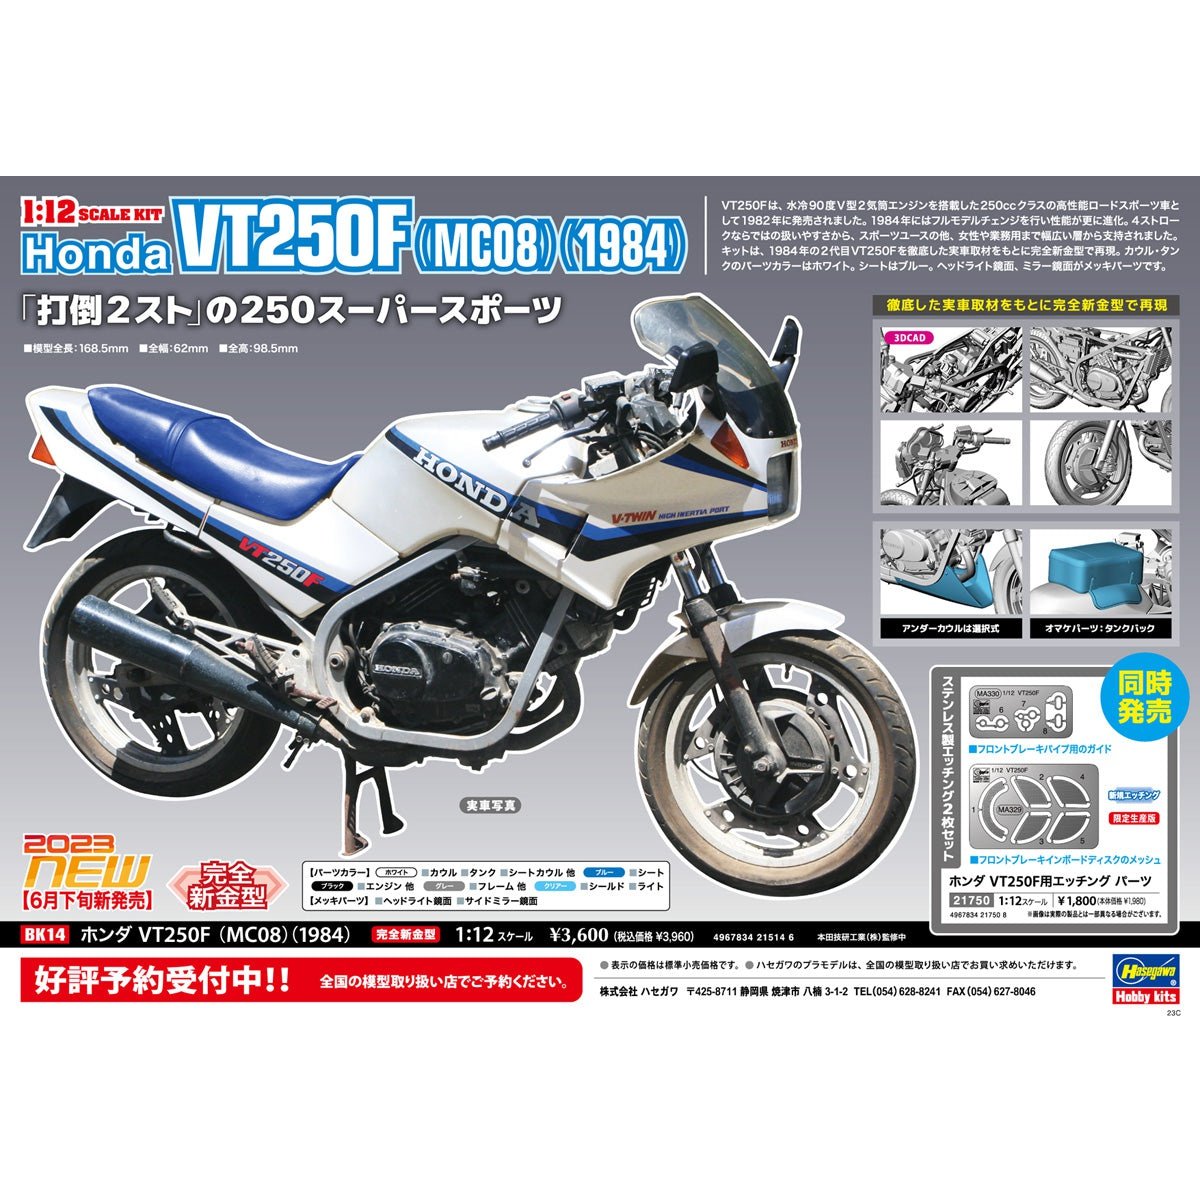 Hasegawa 1/12 BK 014 Honda VT250F MC08 1984 Plastic Model Kit